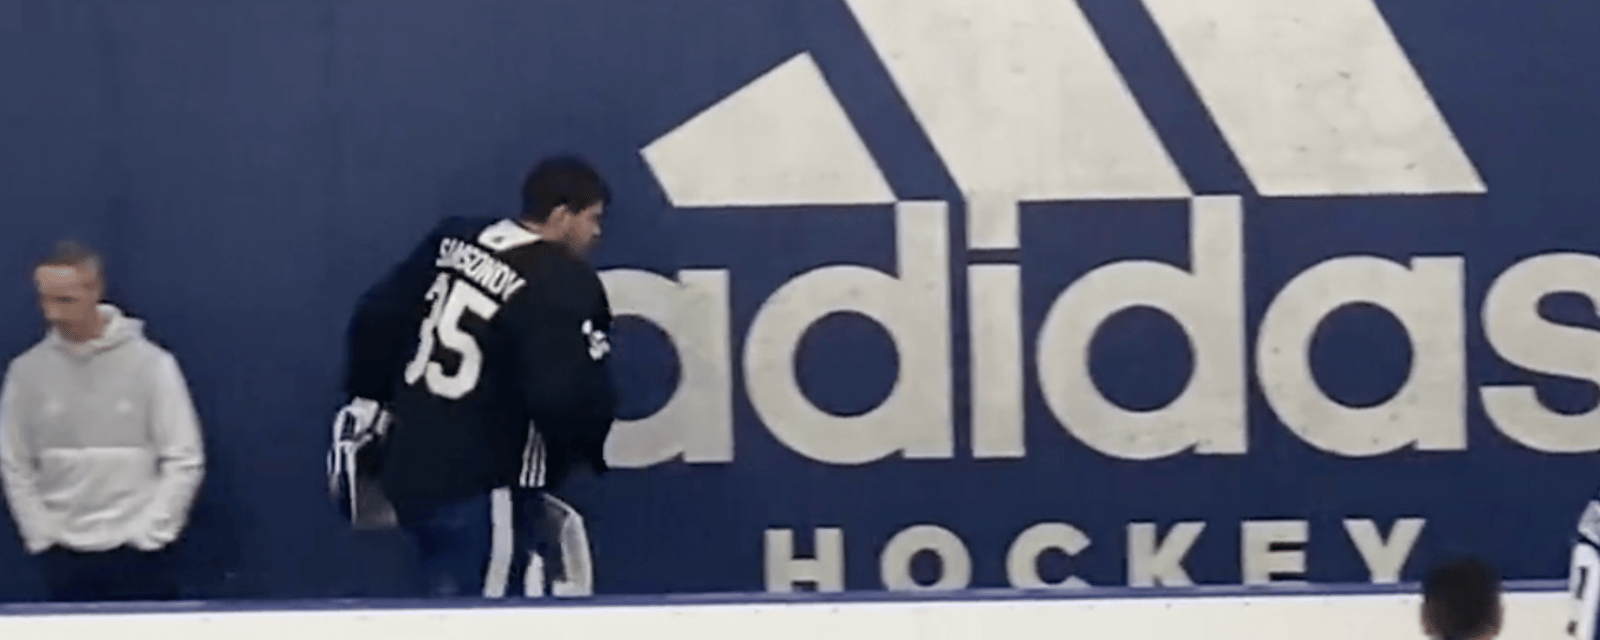 Ilya Samsonov “in distress”, leaves Leafs practice 